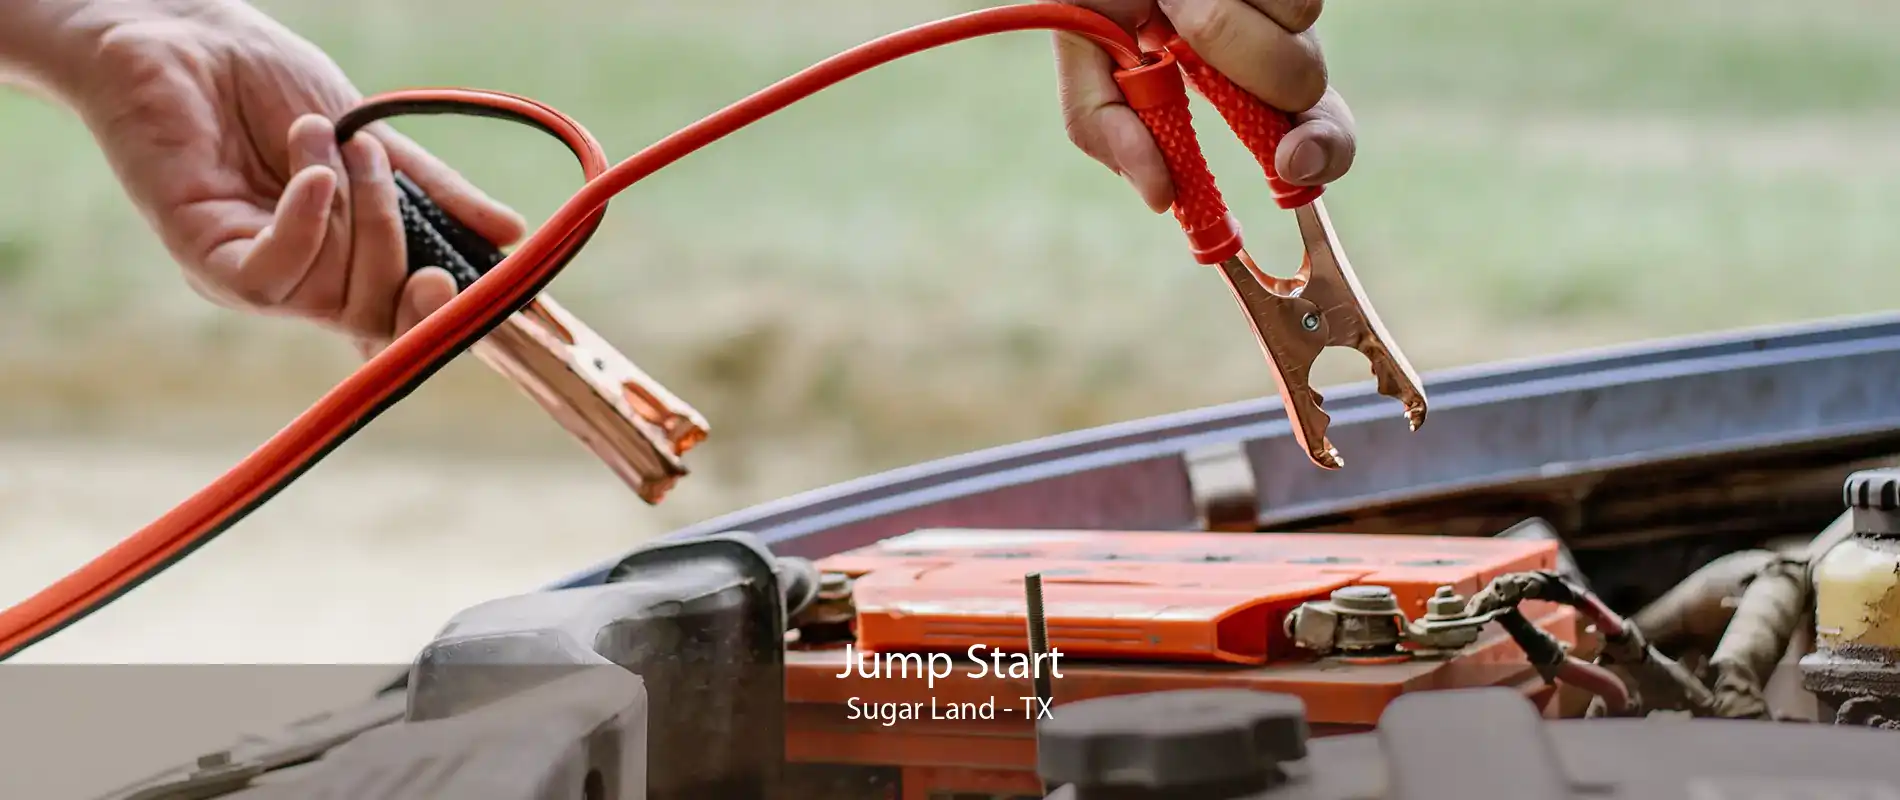 Jump Start Sugar Land - TX